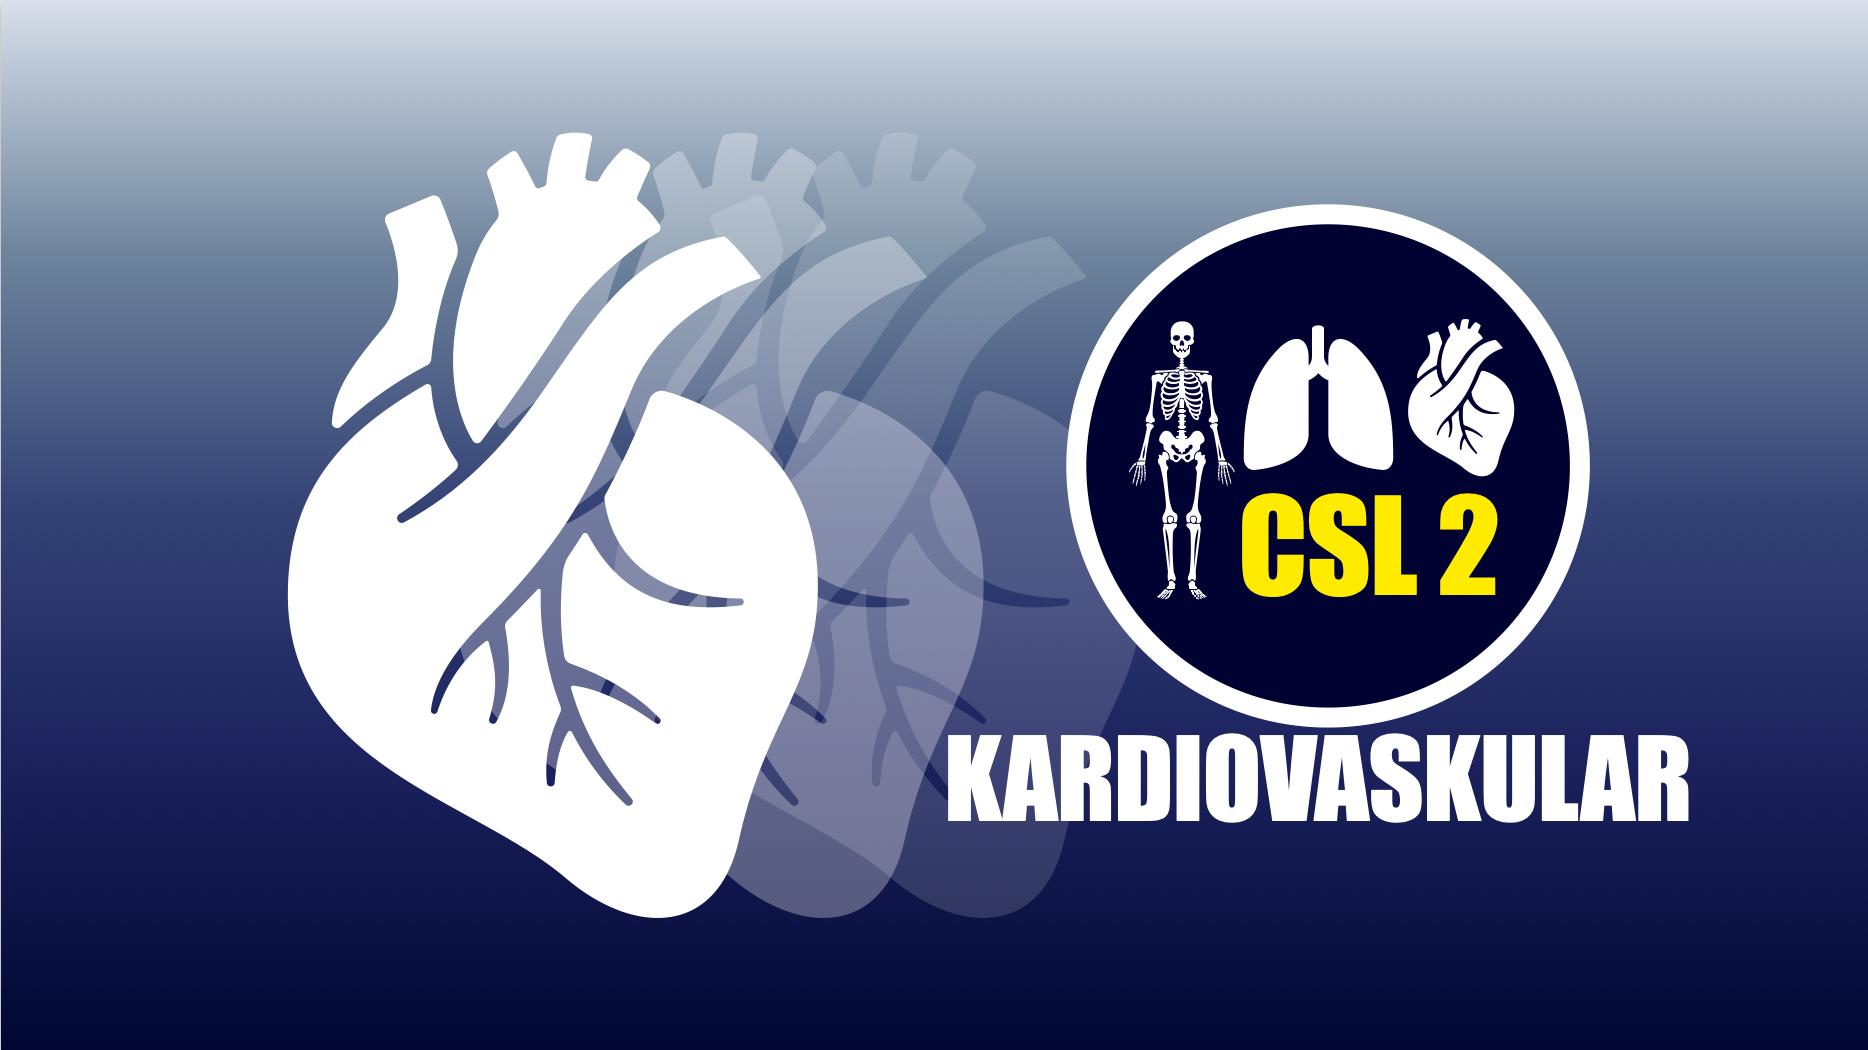 CSL 2 Kardiovaskular